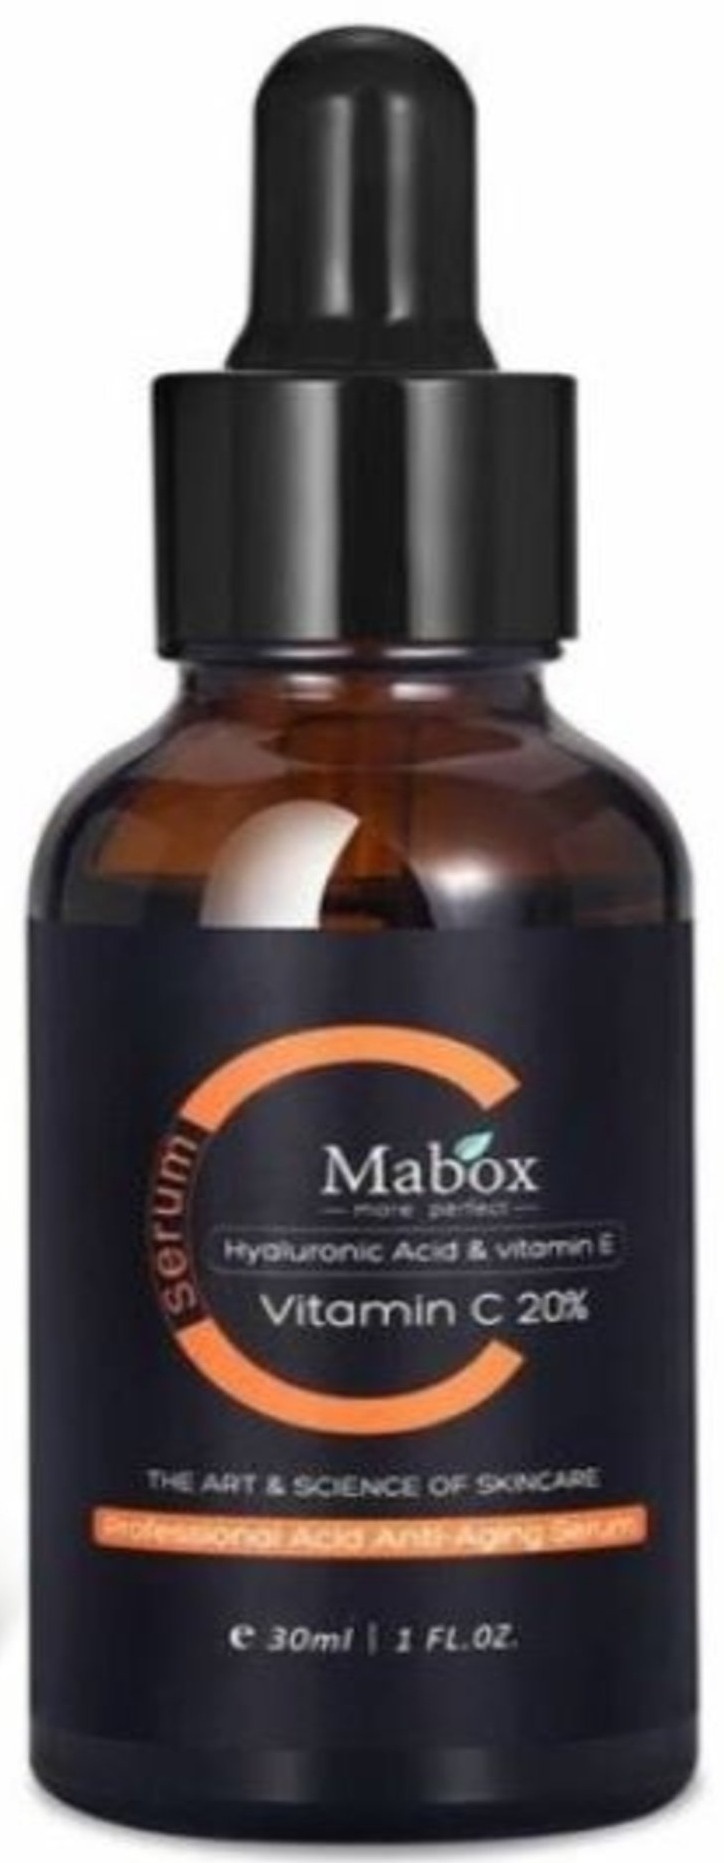 Mabox Vitamin C